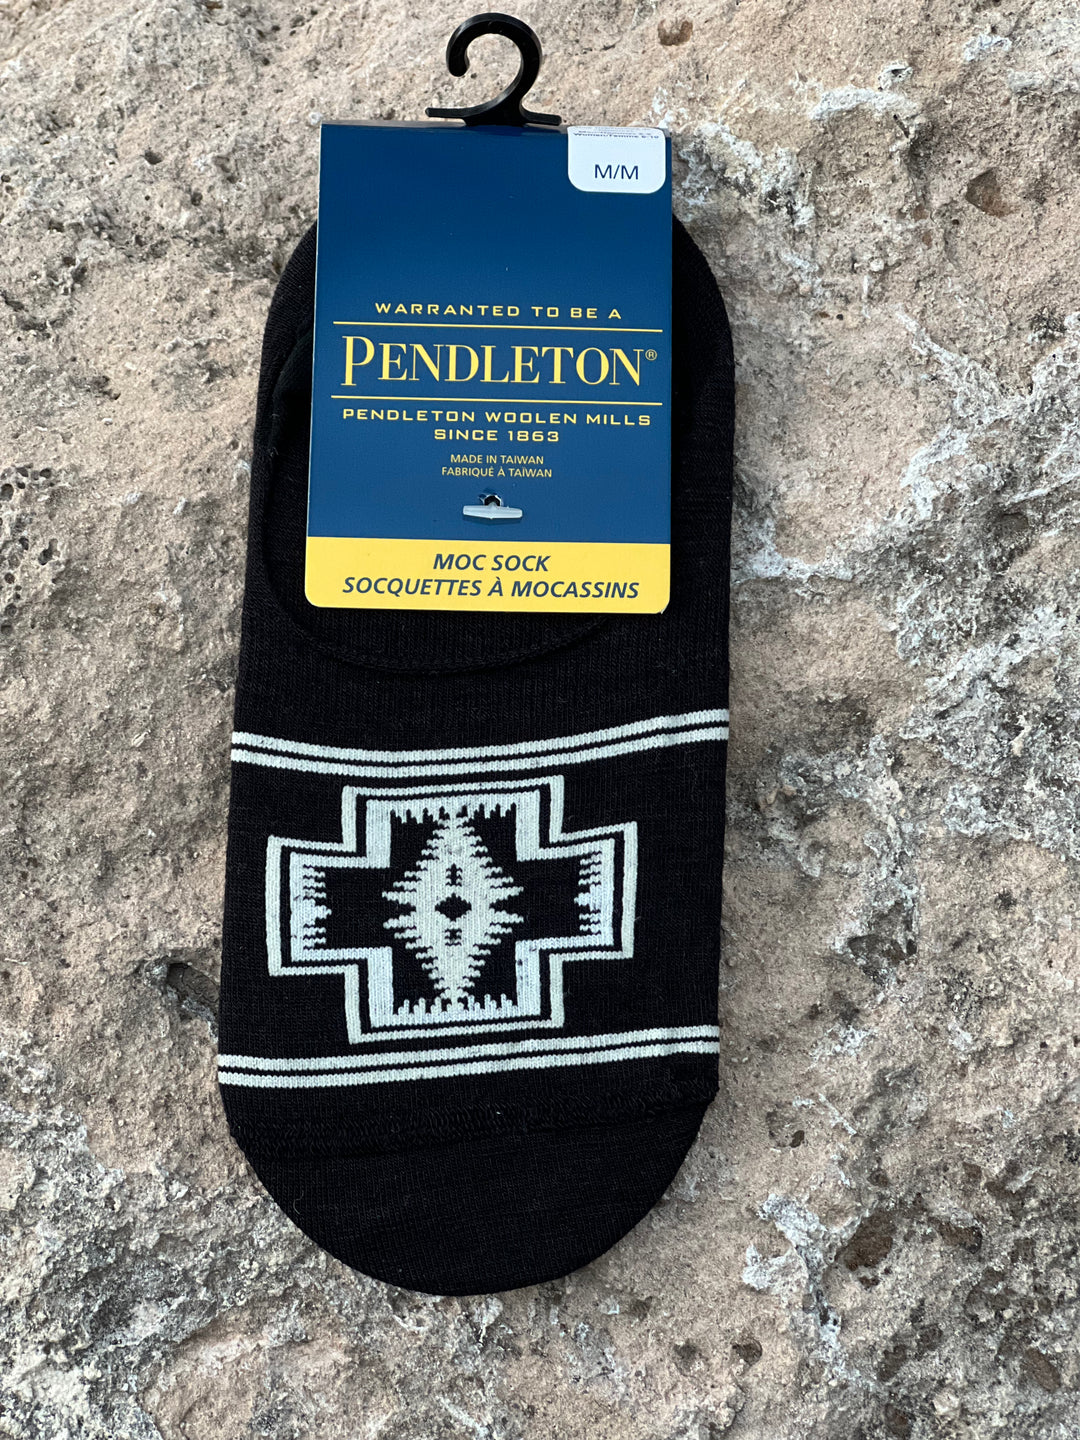 Pendleton Moc Socks